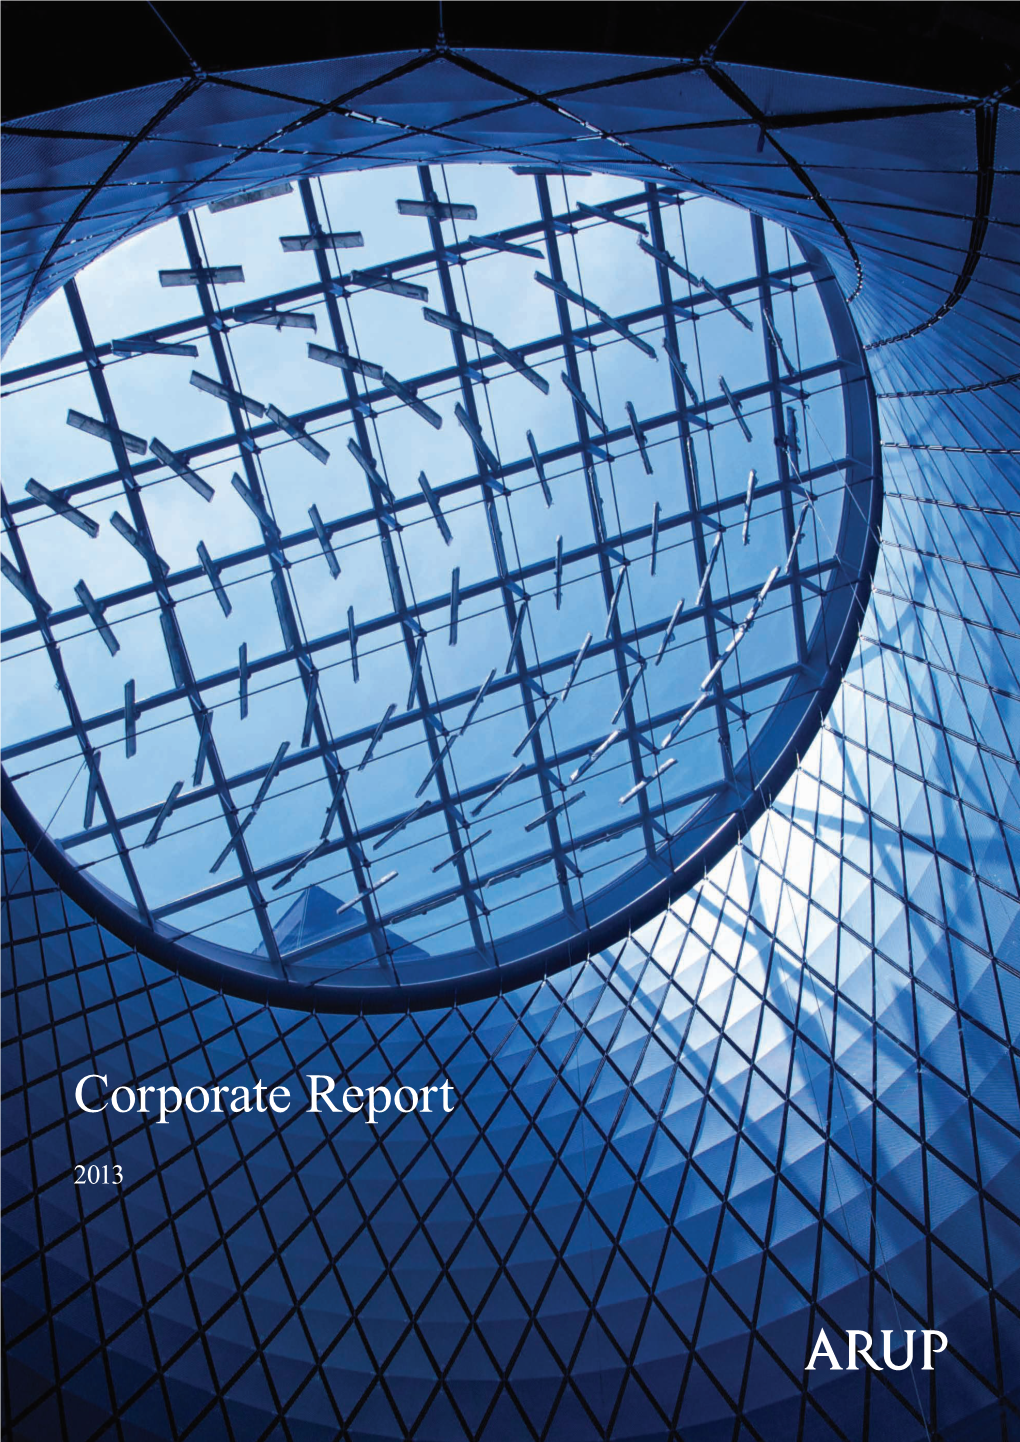 Corporate Report